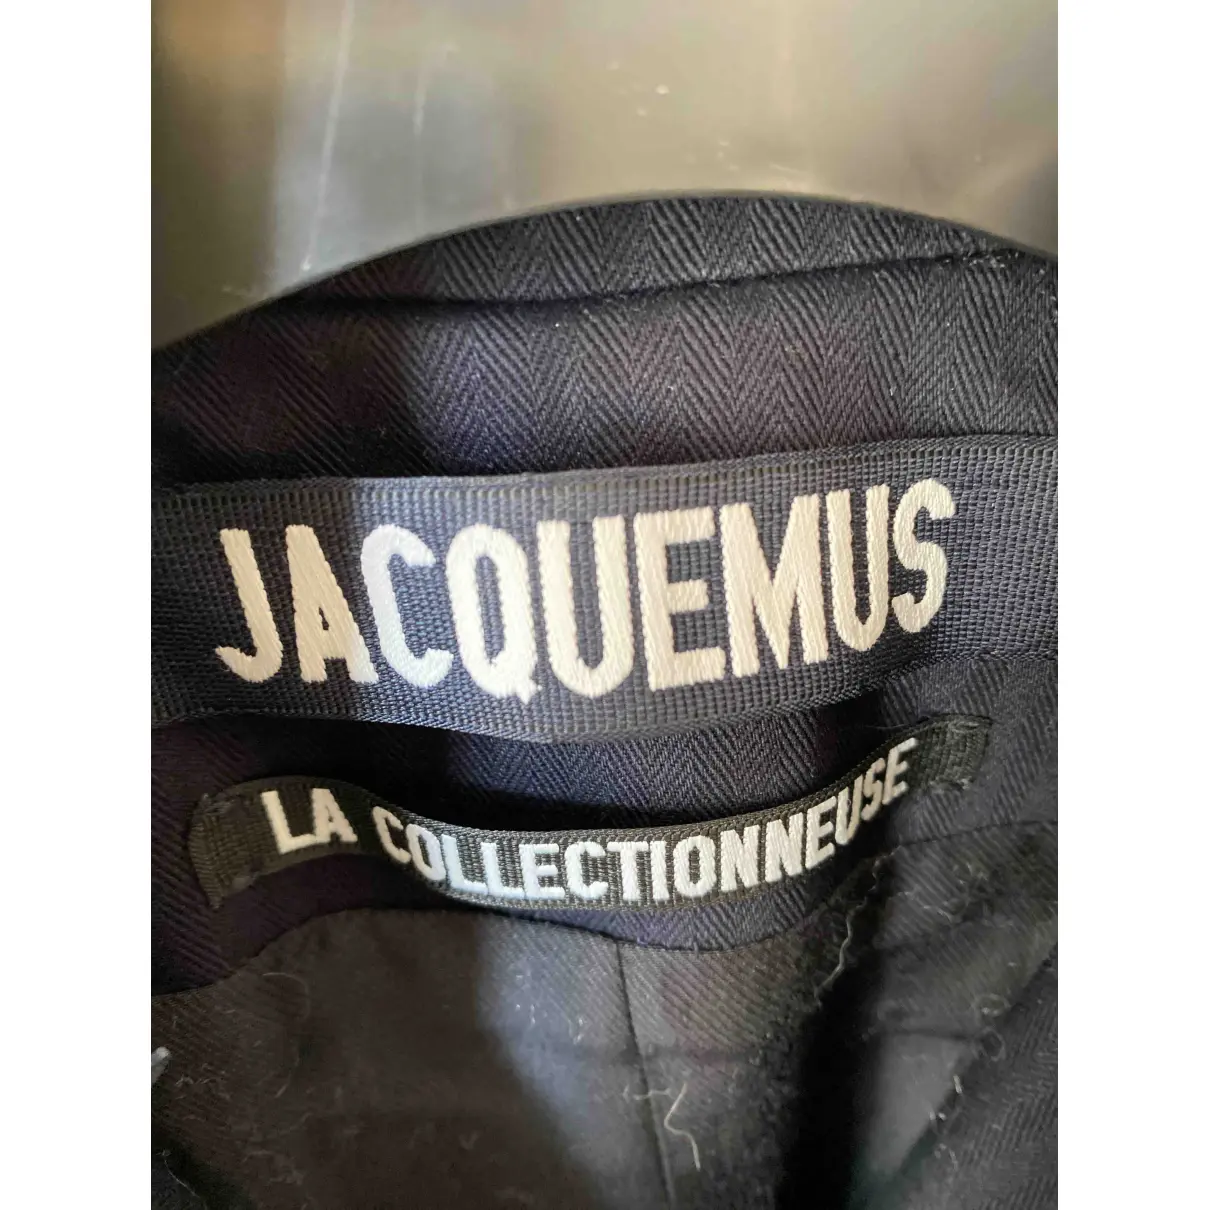 Buy Jacquemus Coat online